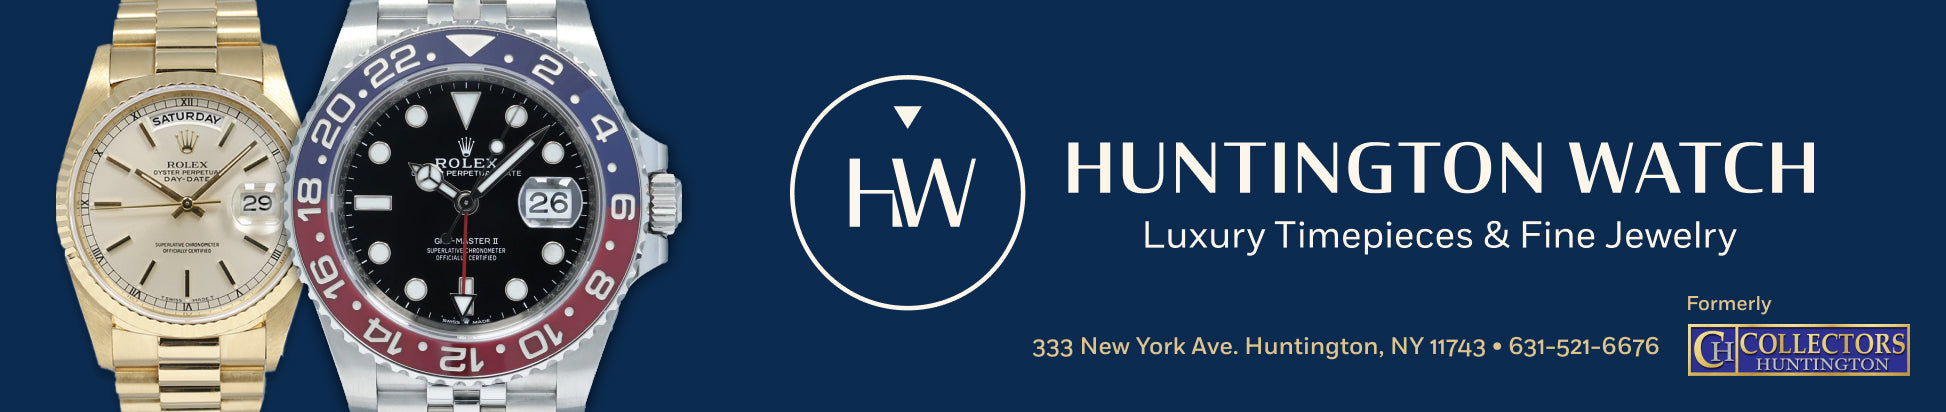 collectors huntington logo